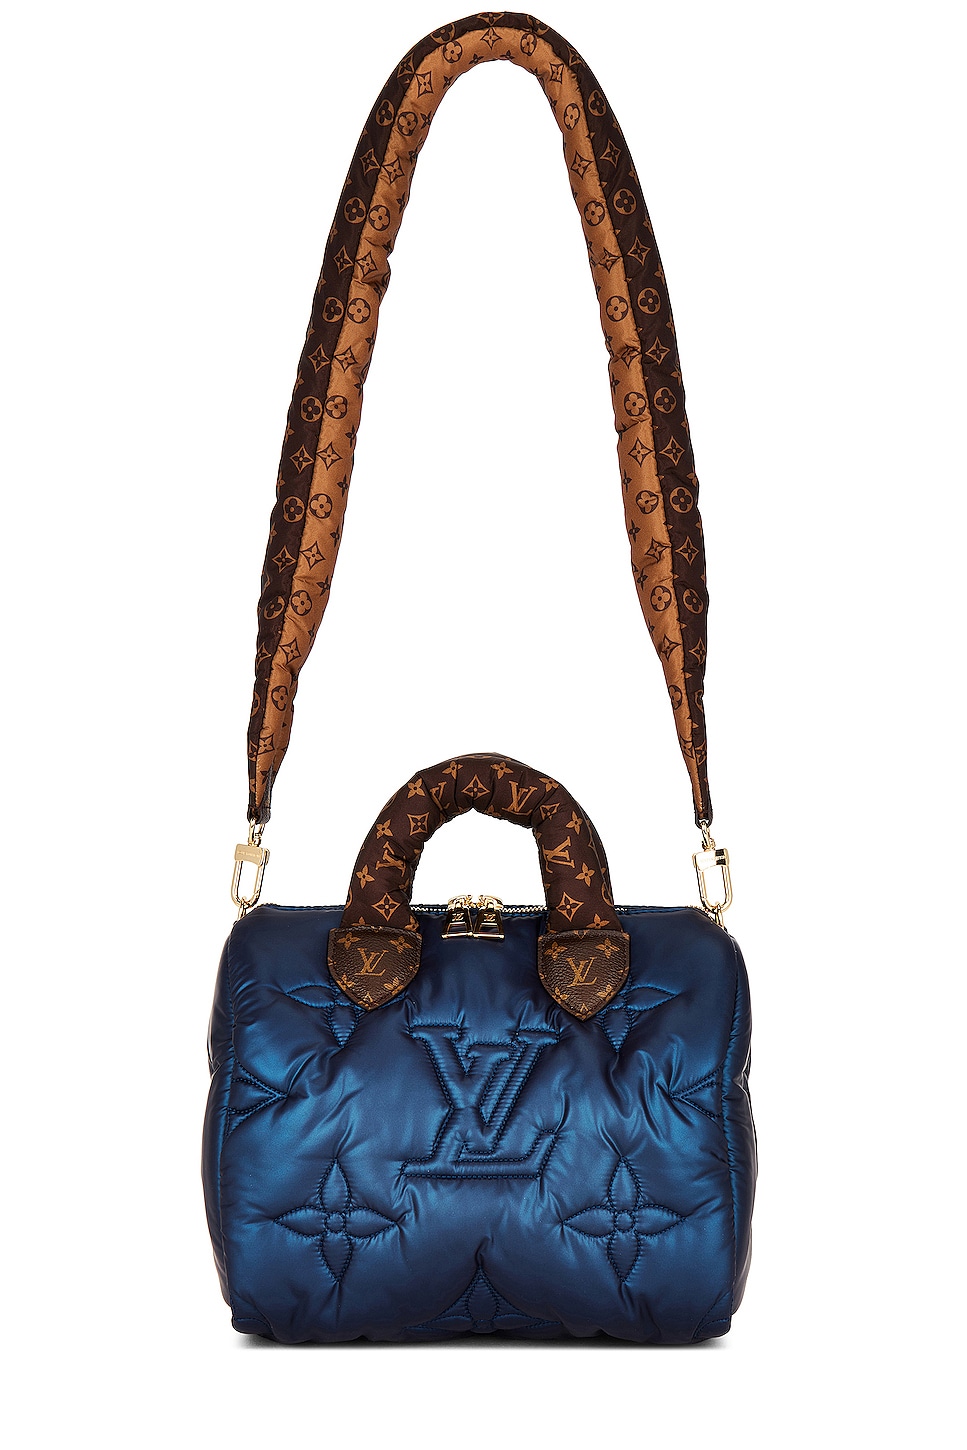 Louis Vuitton Speedy Bandouliere Monogram 25 Brown in Coated